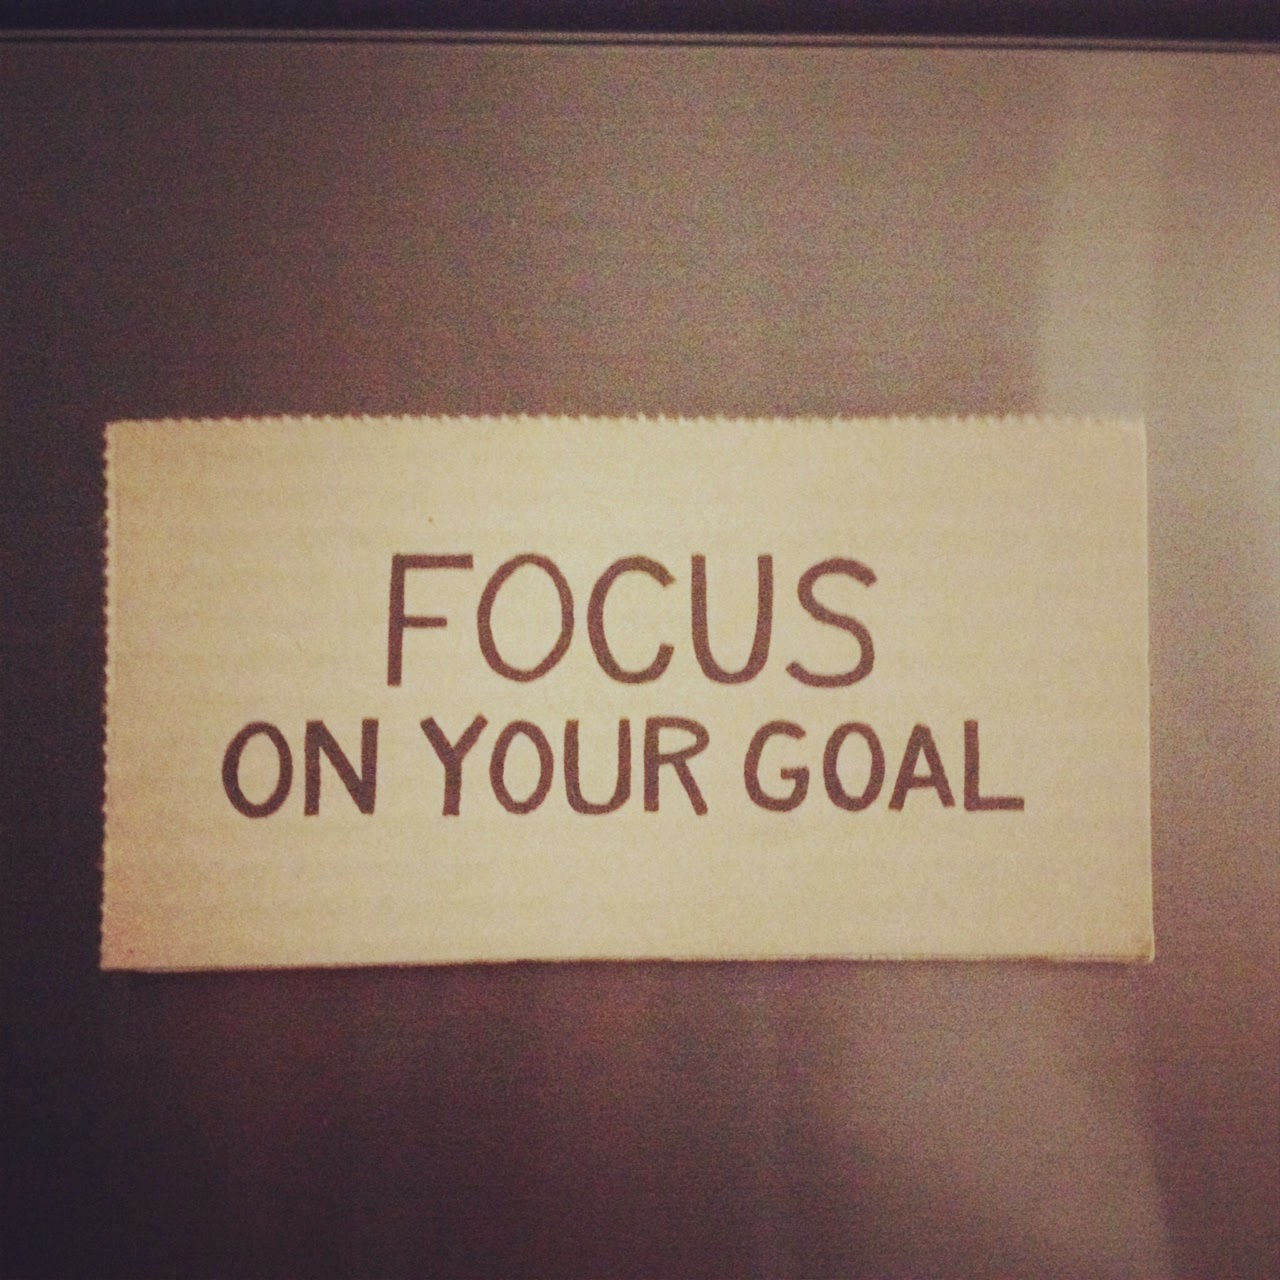 Focus goal. Focus on goal. Focus on your goals. Focus on your goals картина. Focus at your goals shorts.